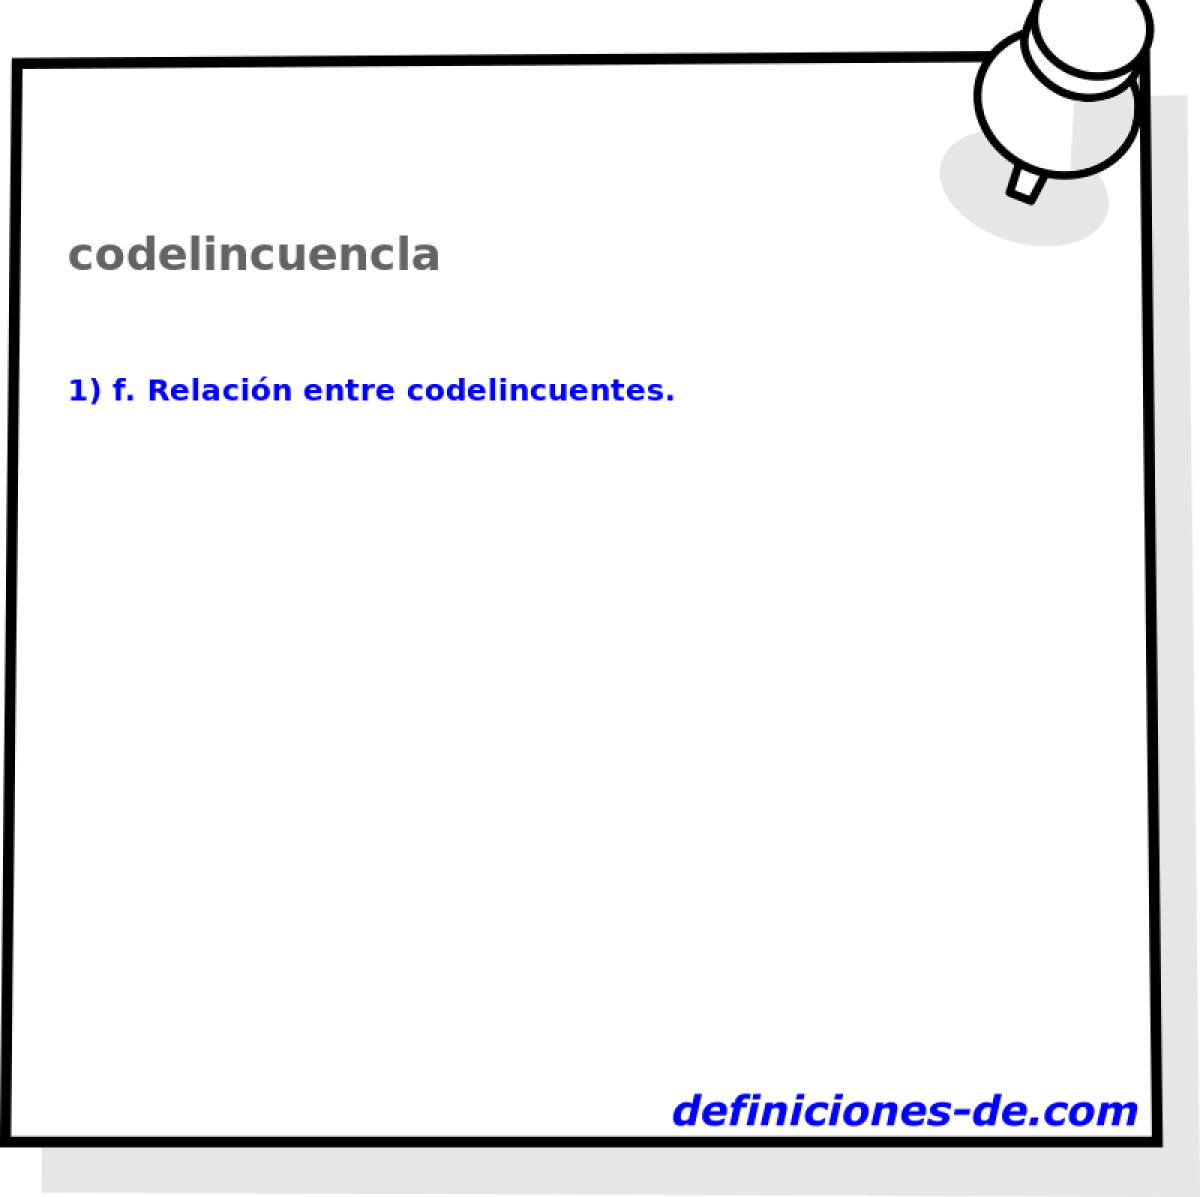 codelincuencla 